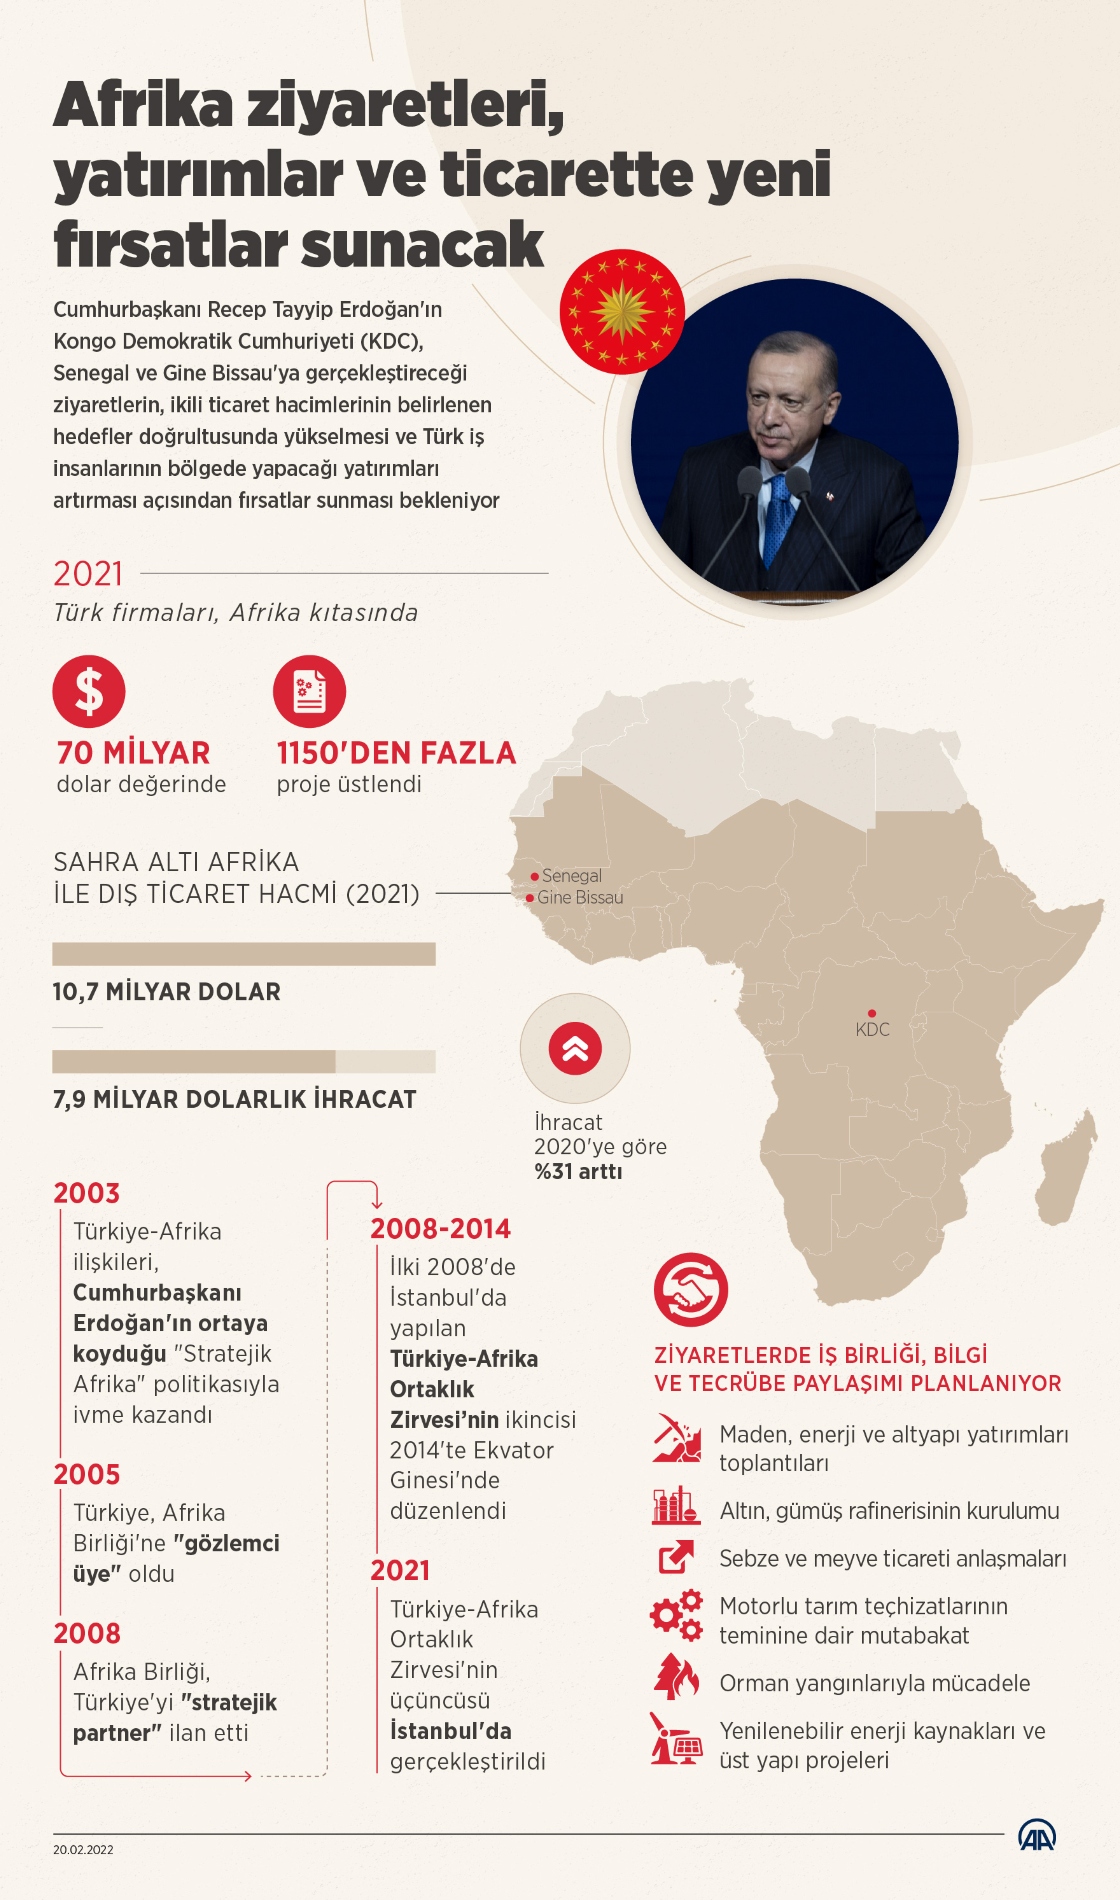 Erdogan u Demokratskoj Republici Kongo dočekan uz najviše državne počasti 68014dbeae7fb88e0292bd6d14f49b45